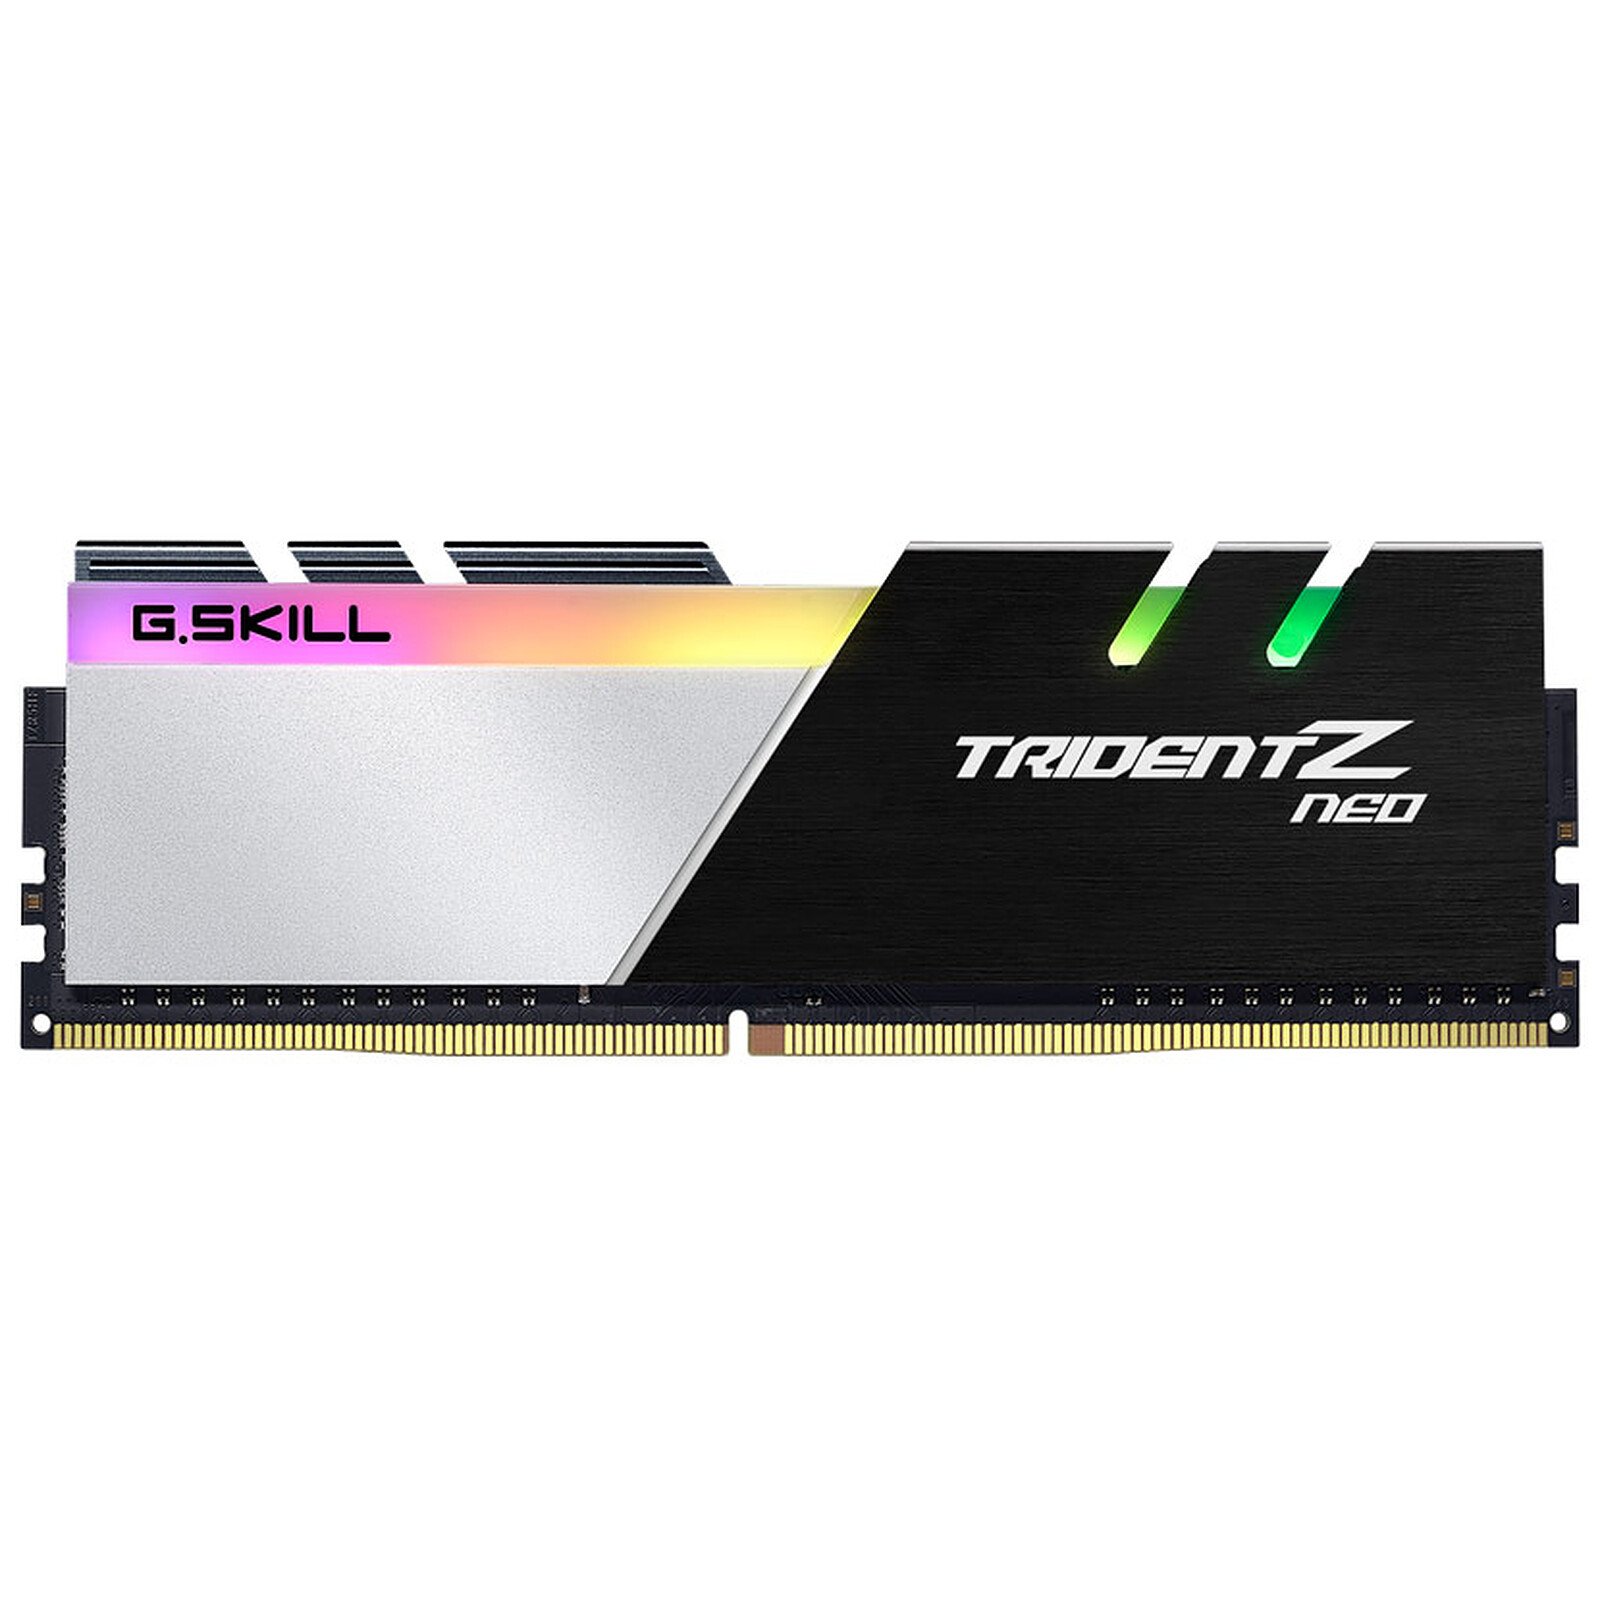 G.Skill Trident Z RGB 16Go (2x8Go) DDR4 3200MHz - Mémoire PC G.Skill sur